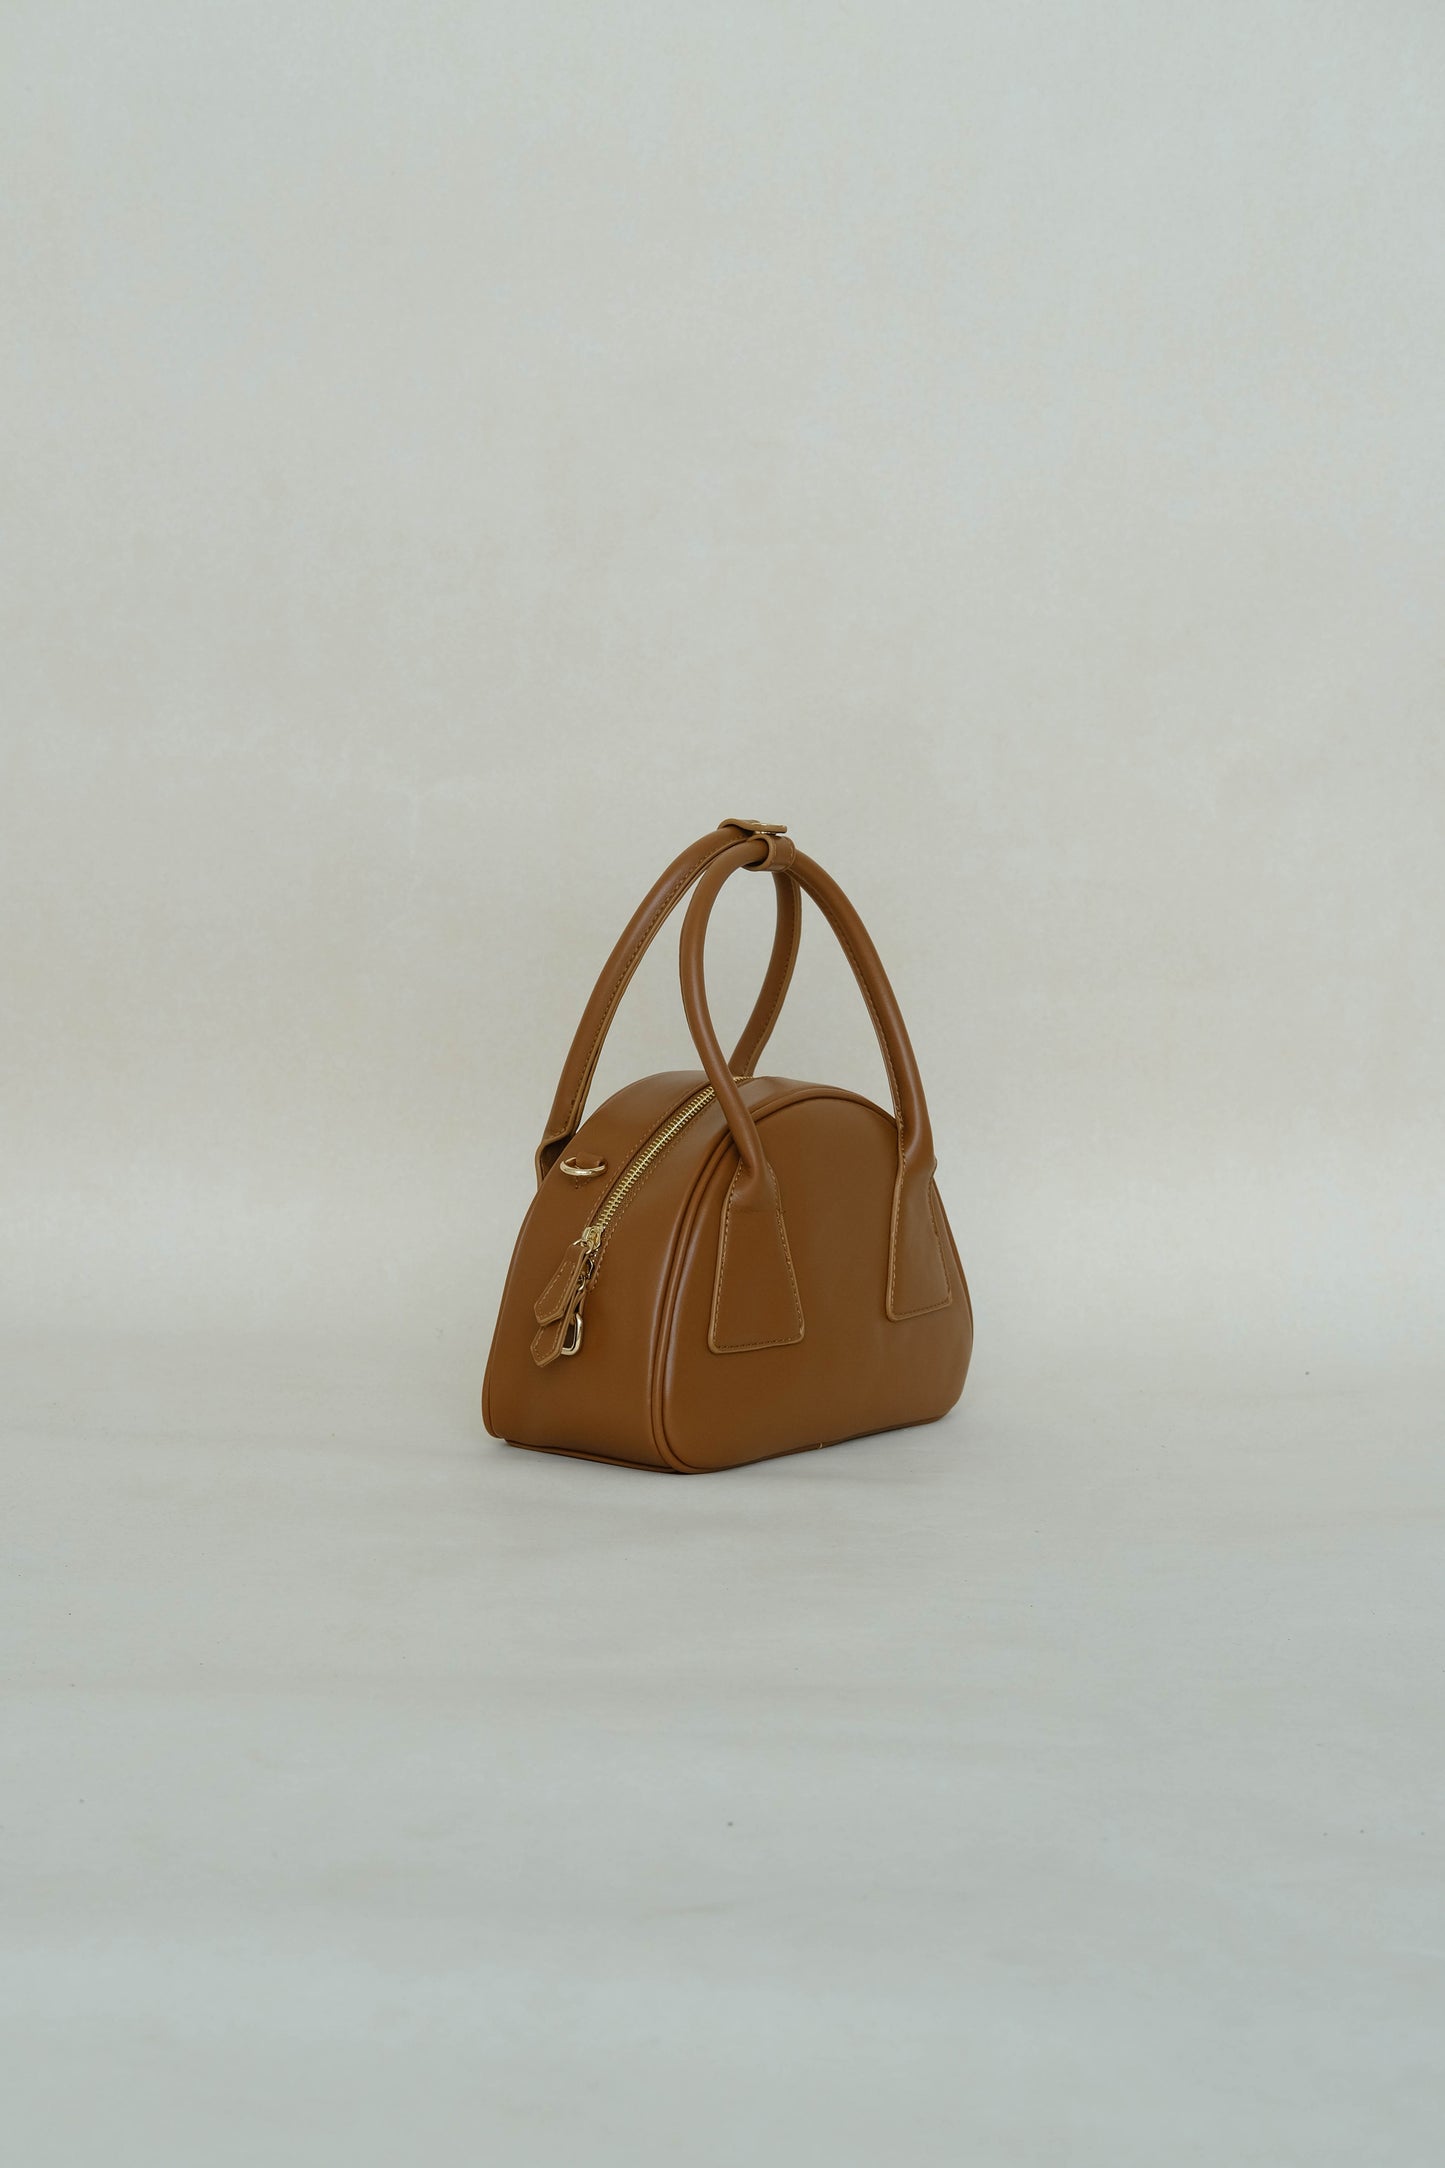 Japanese triangular rice ball shoulder crossbody bag in light brown